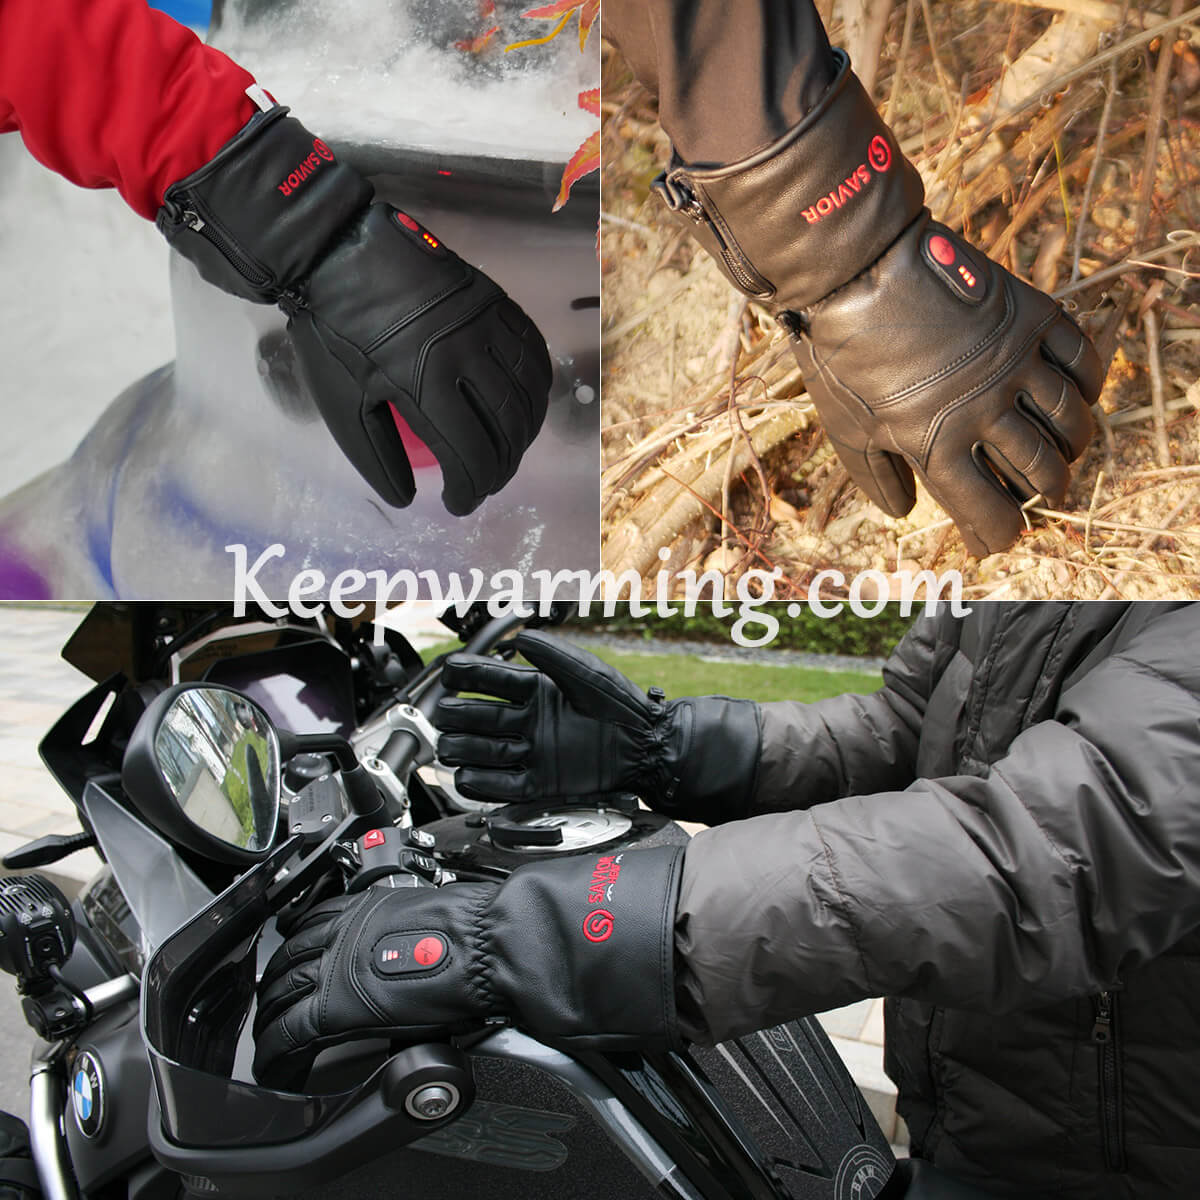 Savior Heat Electric Heat Gloves Outdoor Full Finger Men Ski Mitten Lithium  Battery Heating,Black